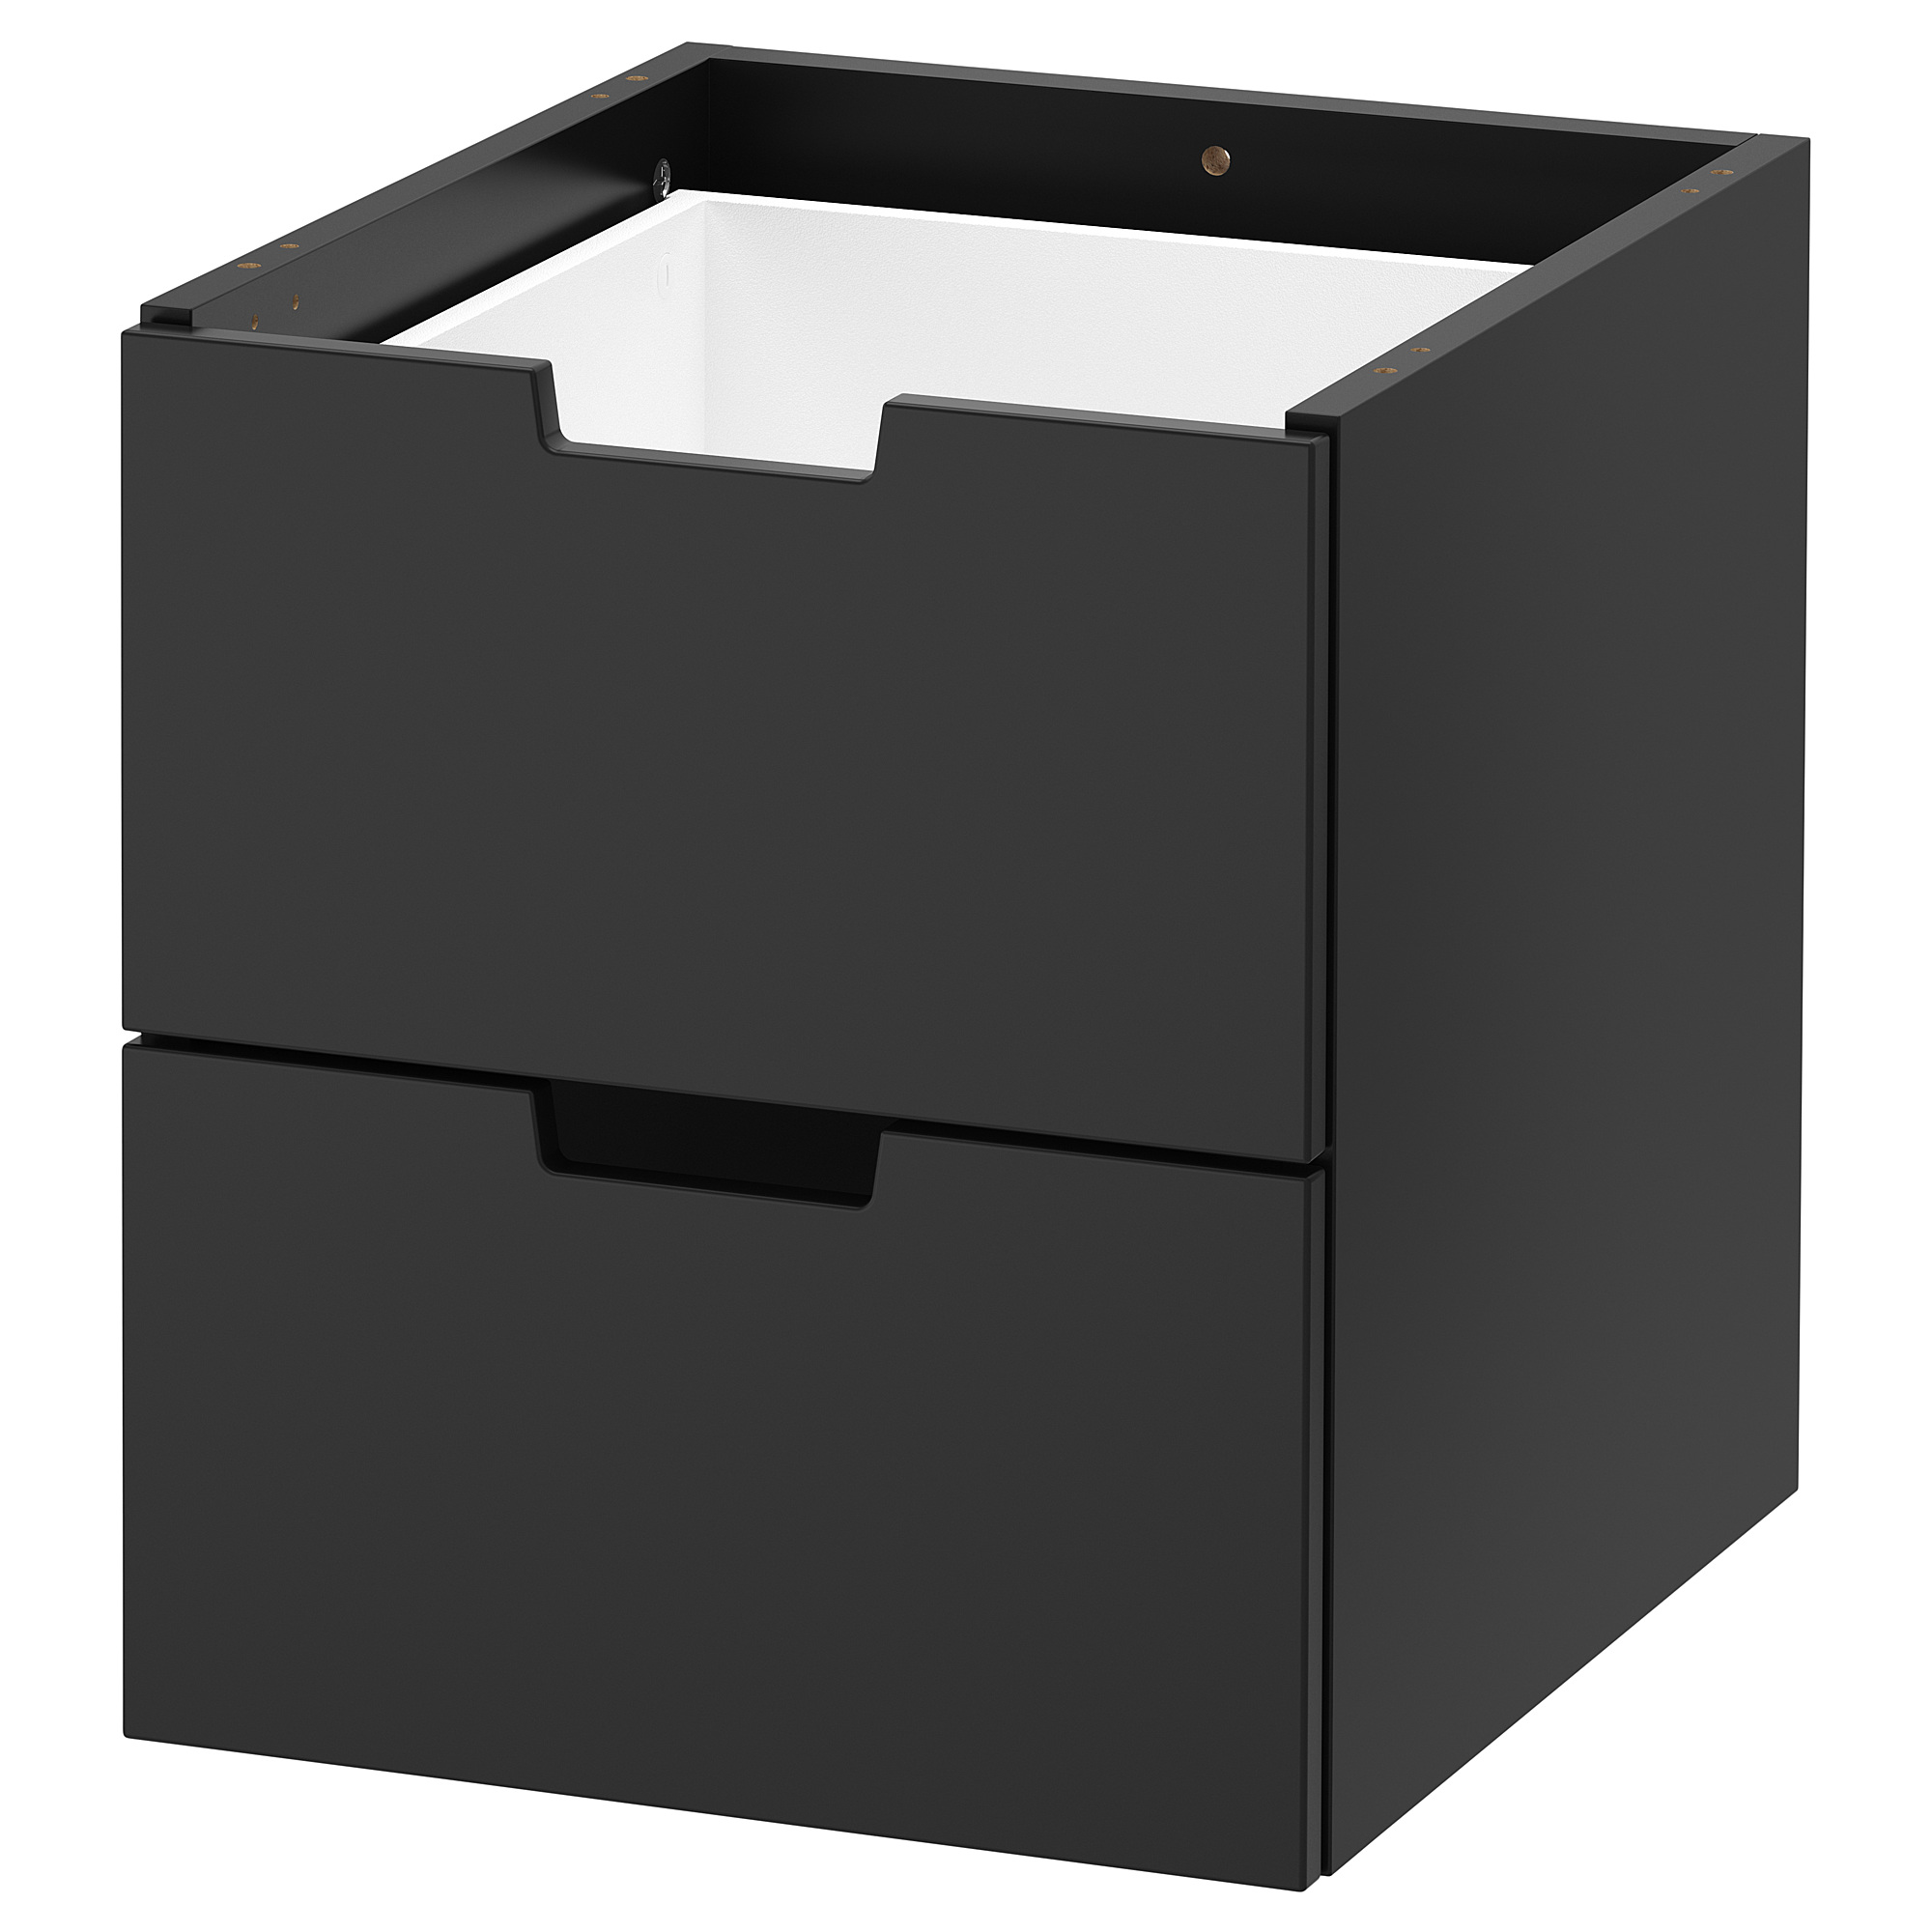 NORDLI modular chest of 2 drawers